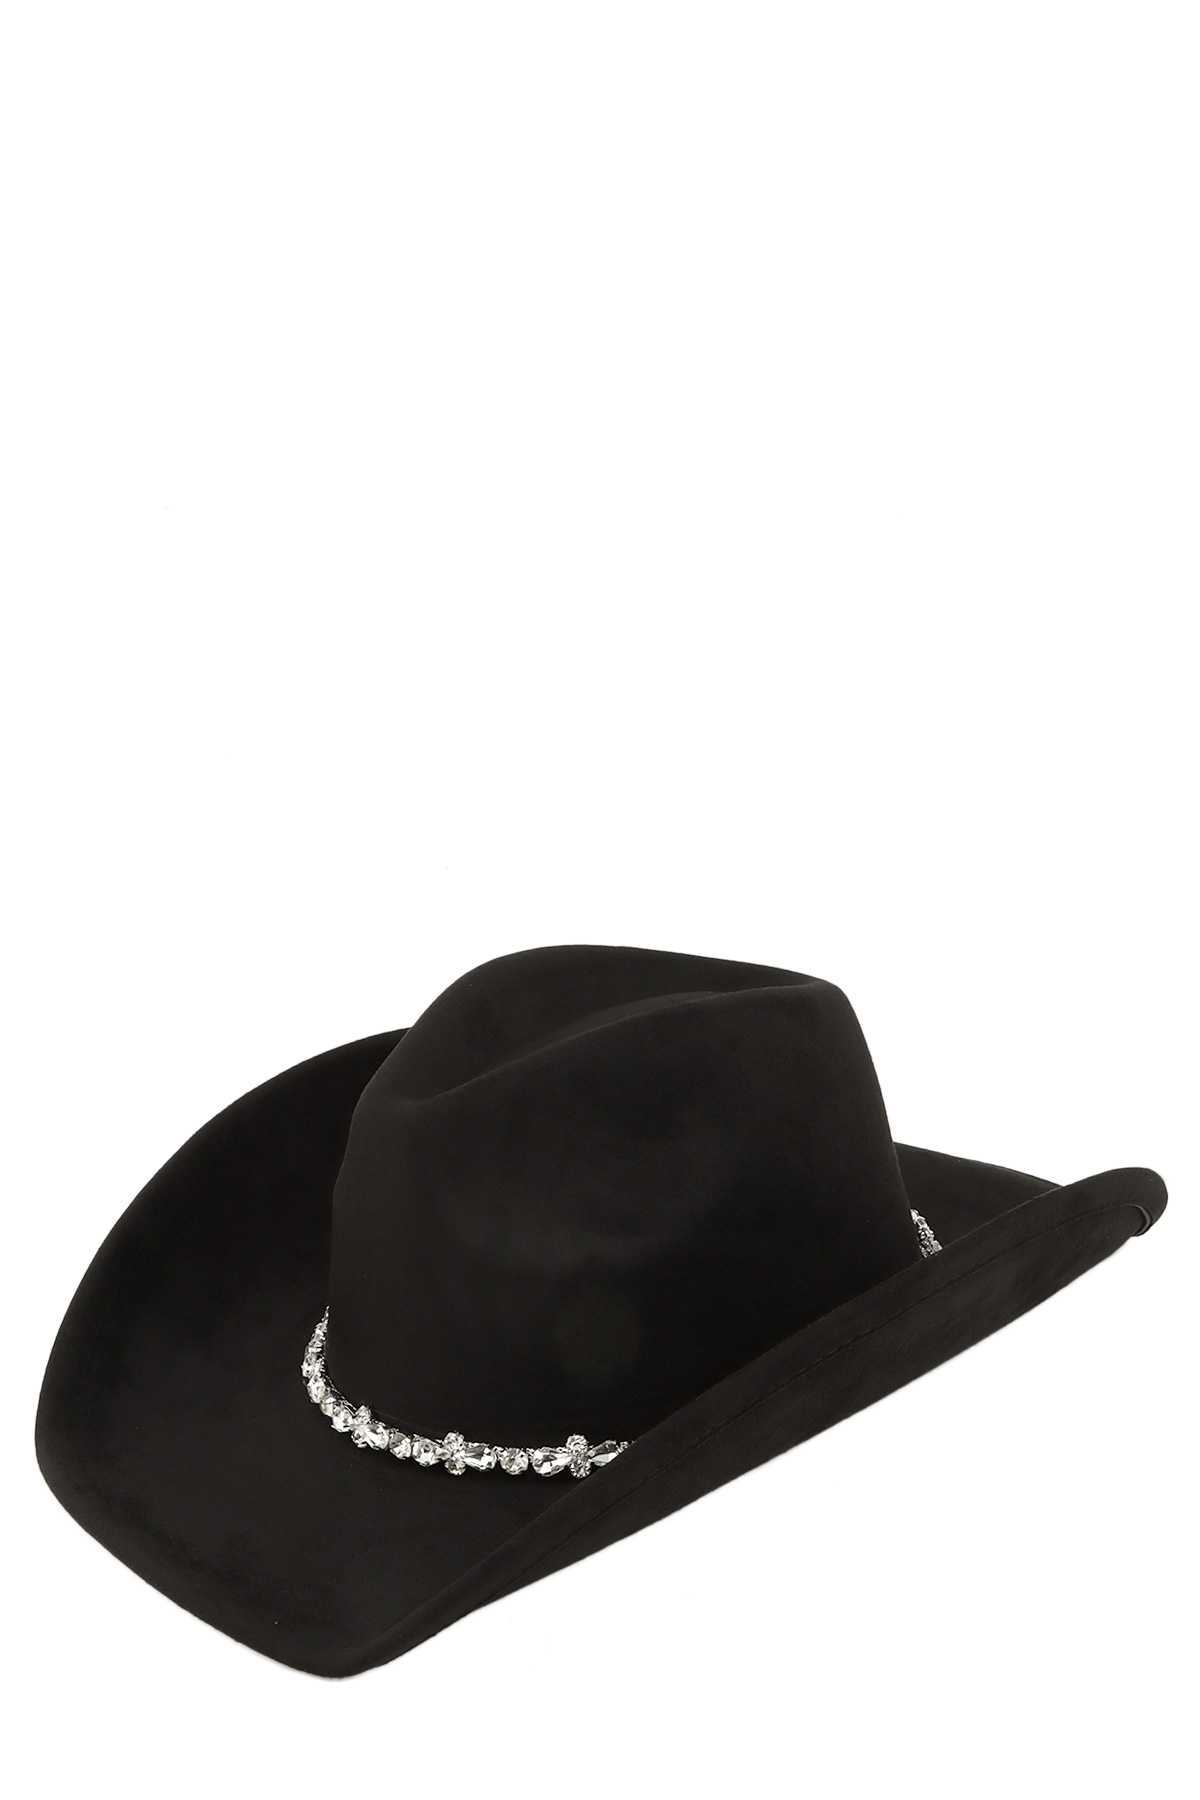 Rhinestone Accent Fedora Hat